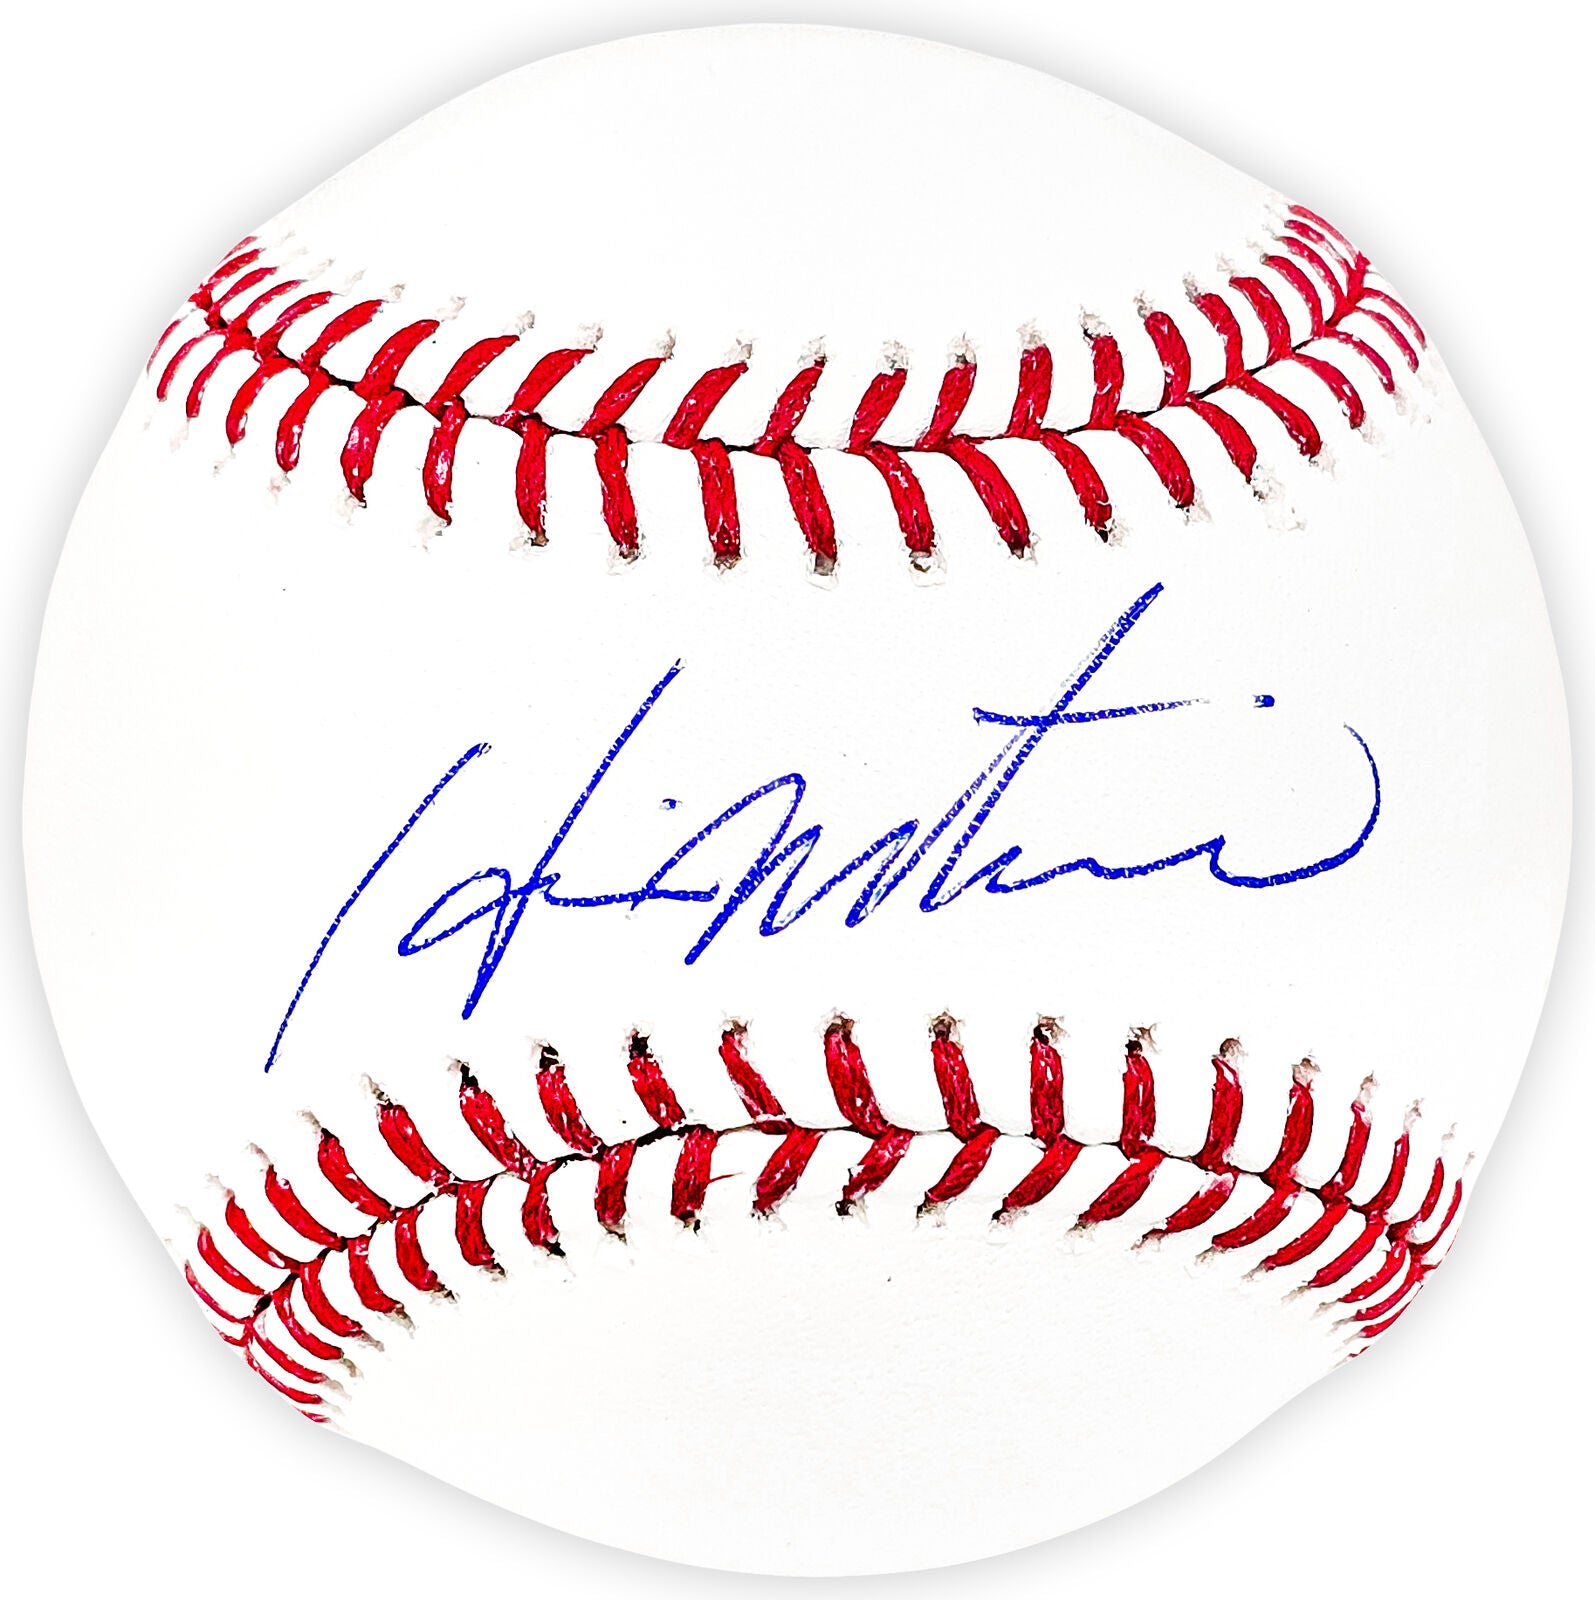 Aaron Judge Autographed Baseball [ New York Yankees ]